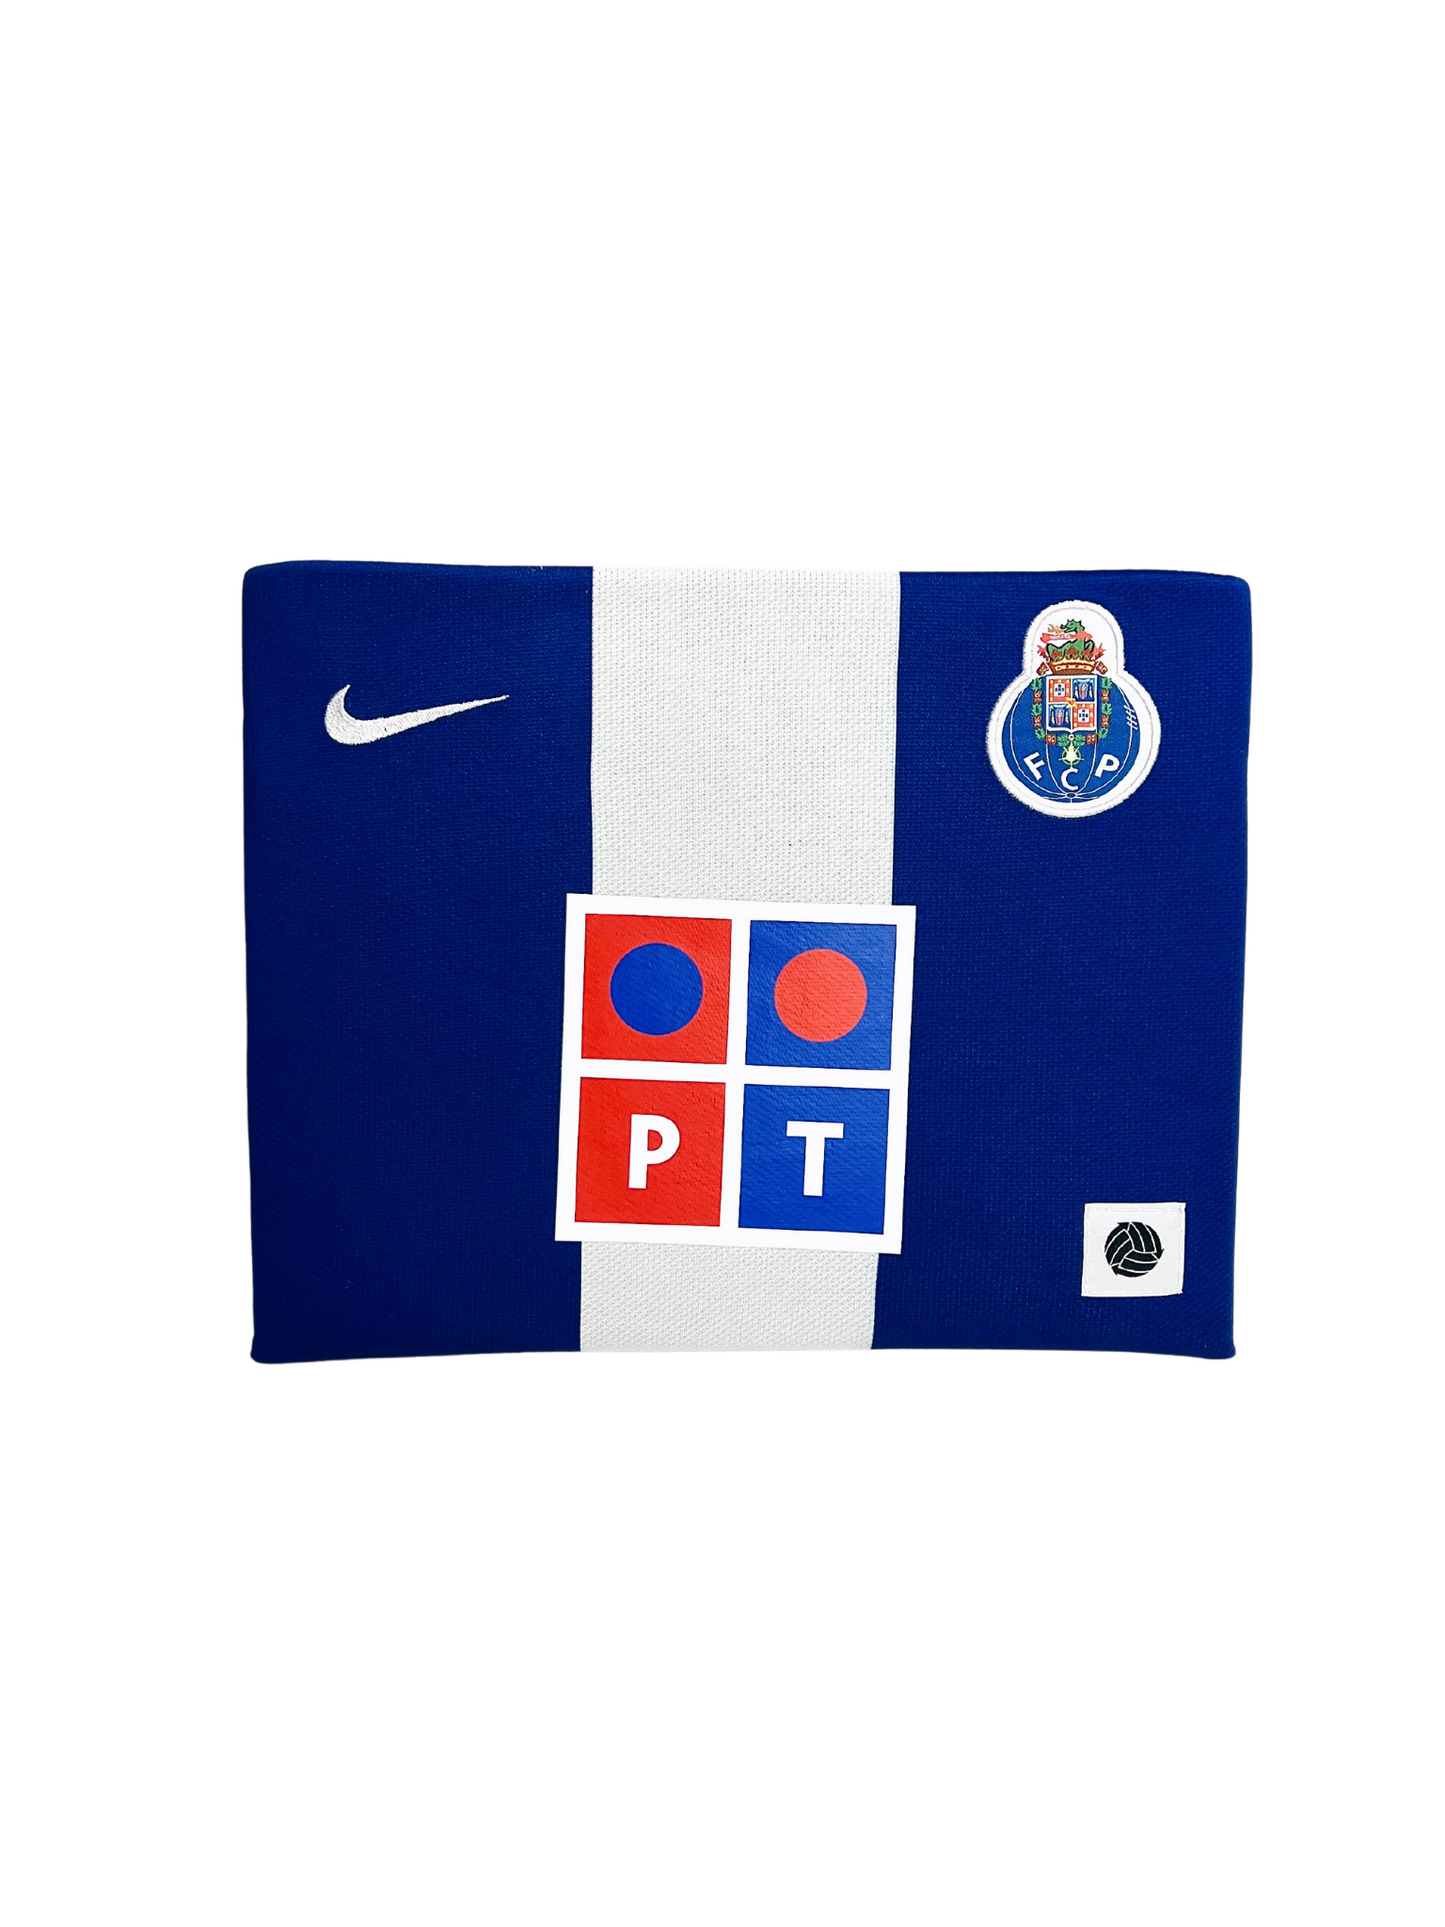 FC Porto 13 inch Laptop Sleeve